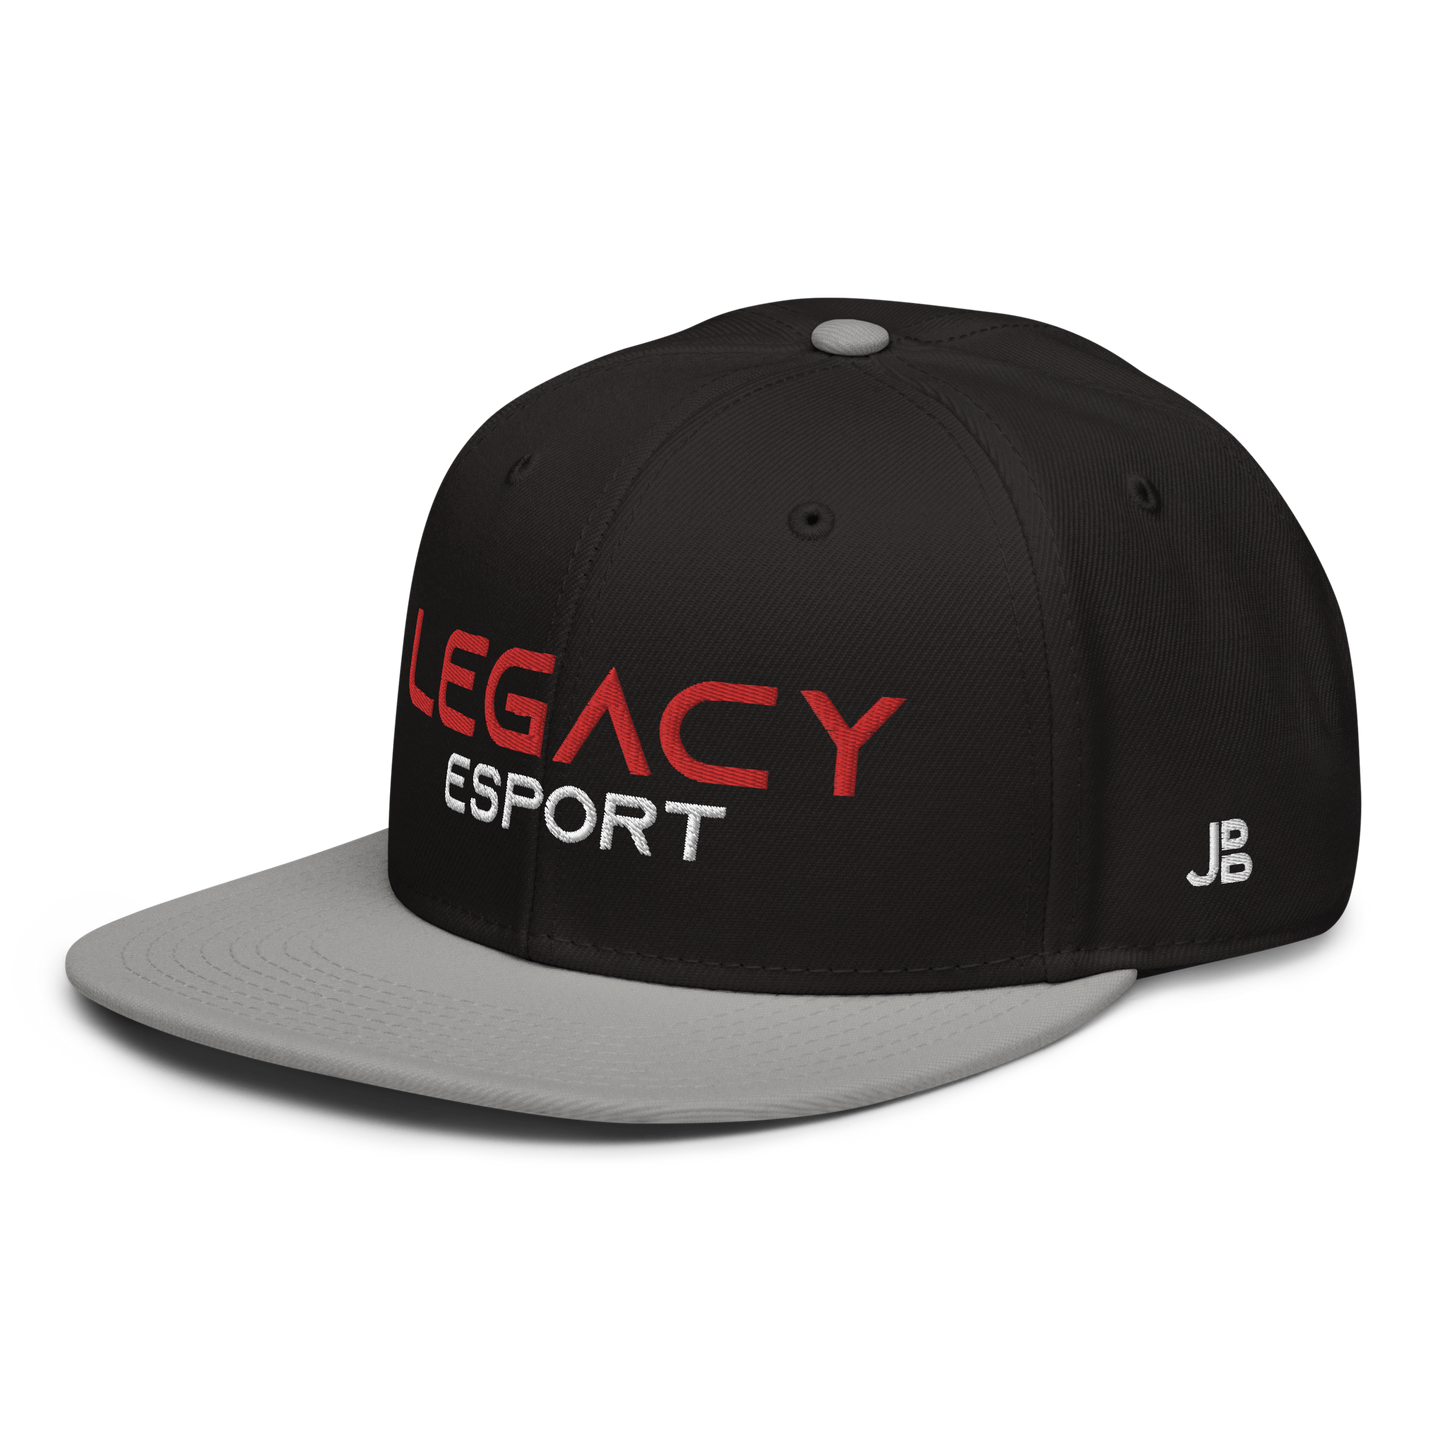 LEGACY ESPORT - Snapback Cap